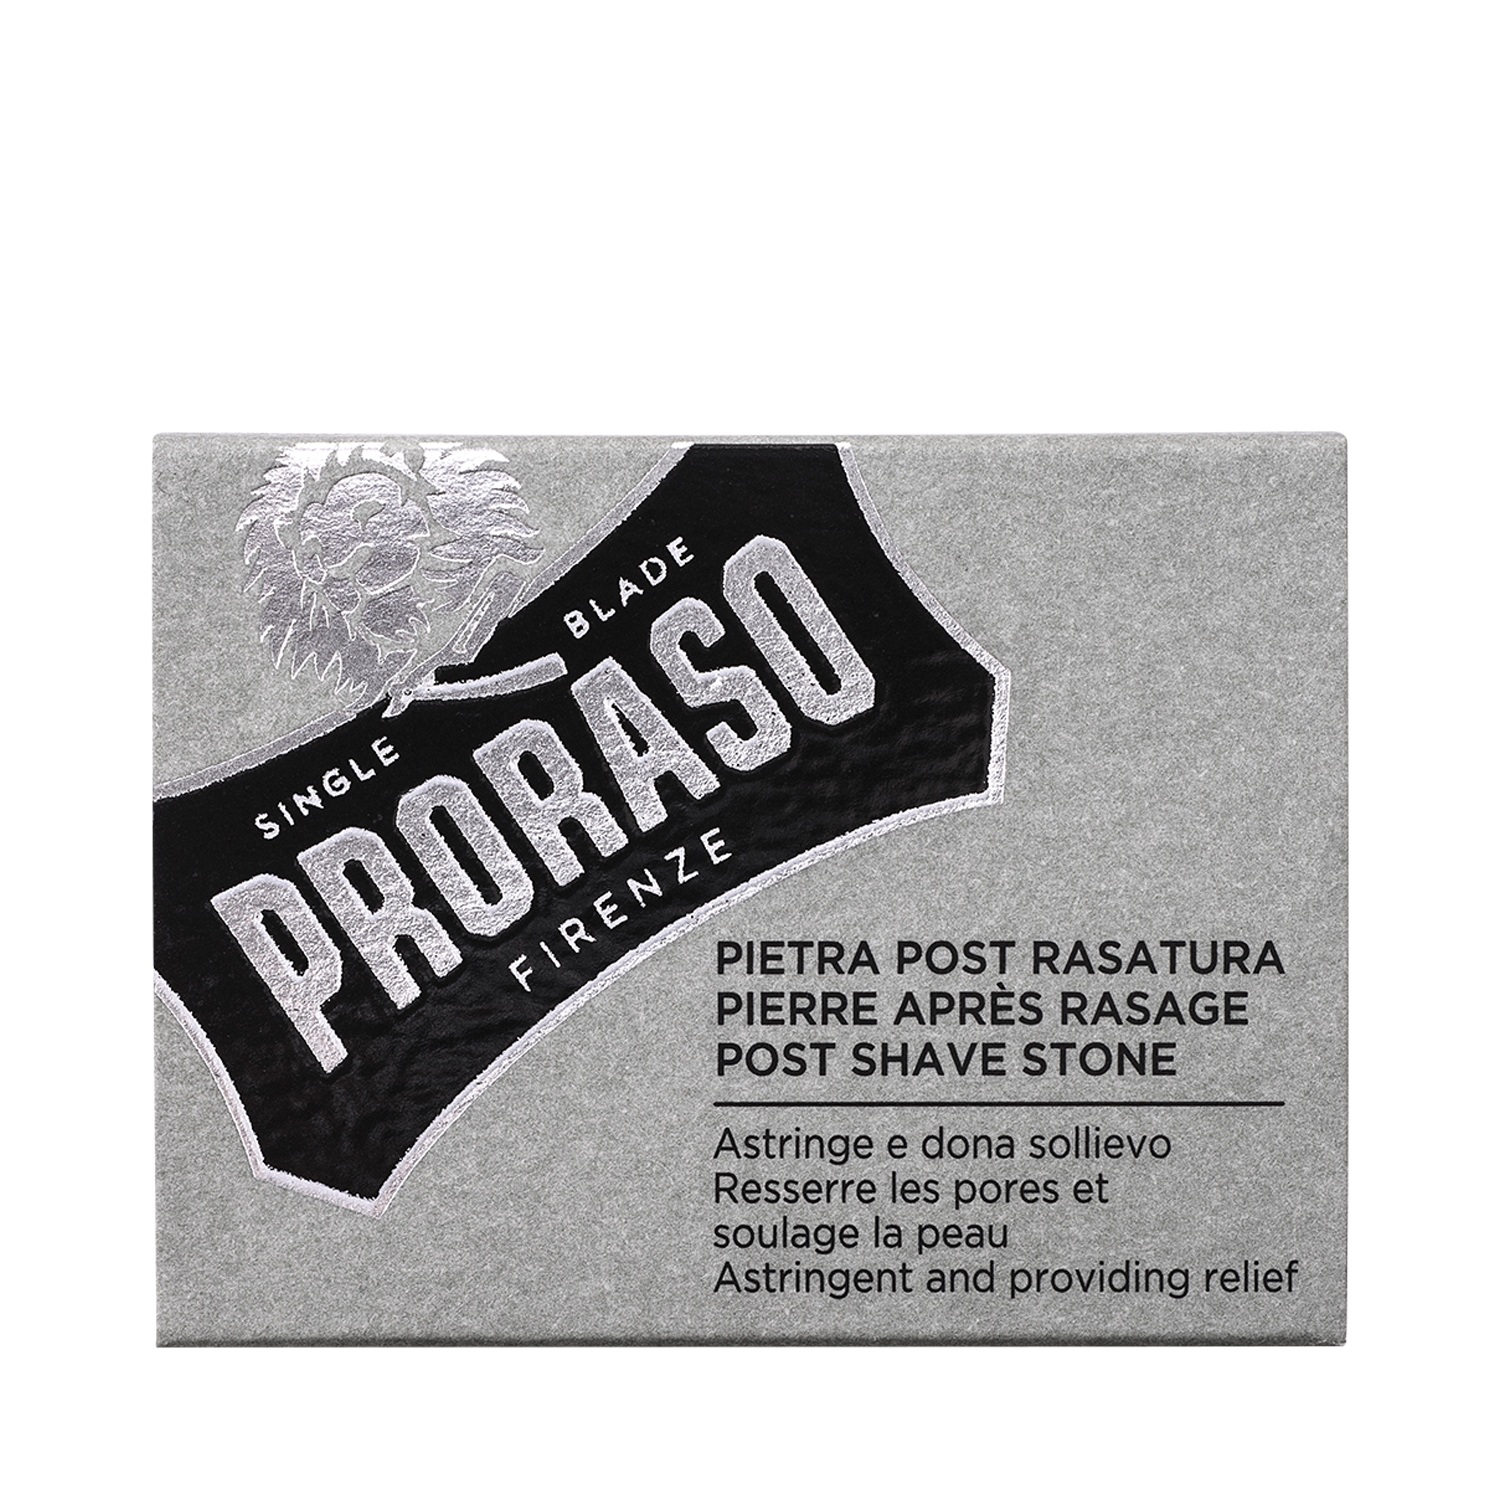 Proraso - Alaunstein - SINGLE BLADE